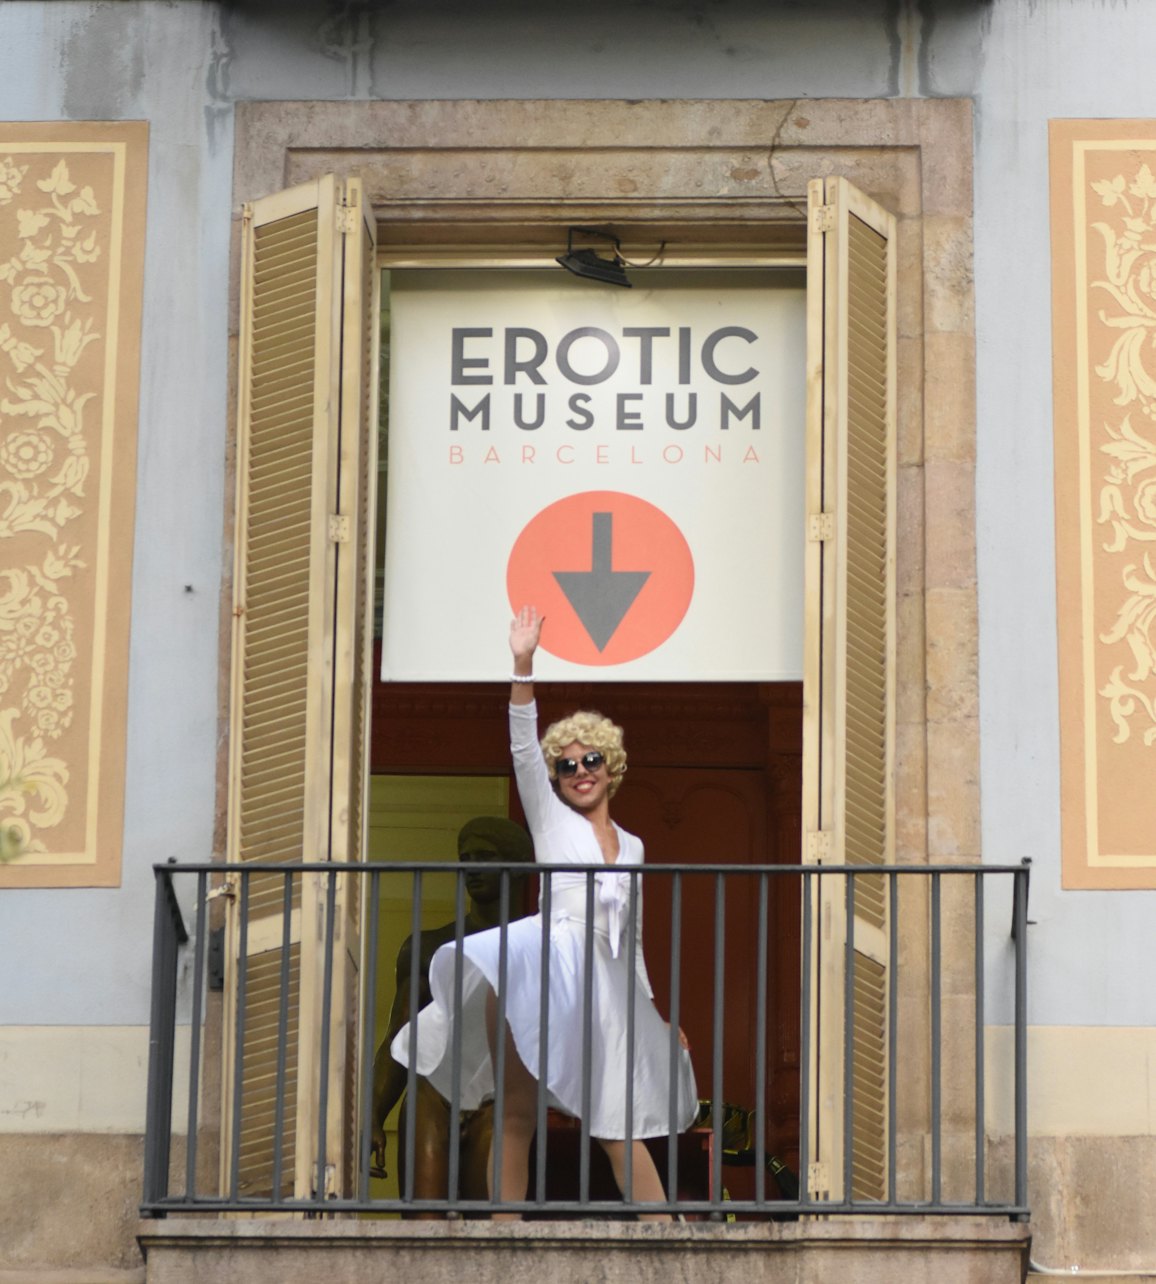 Erotic Museum of Barcelona - Accommodations in Barcelona